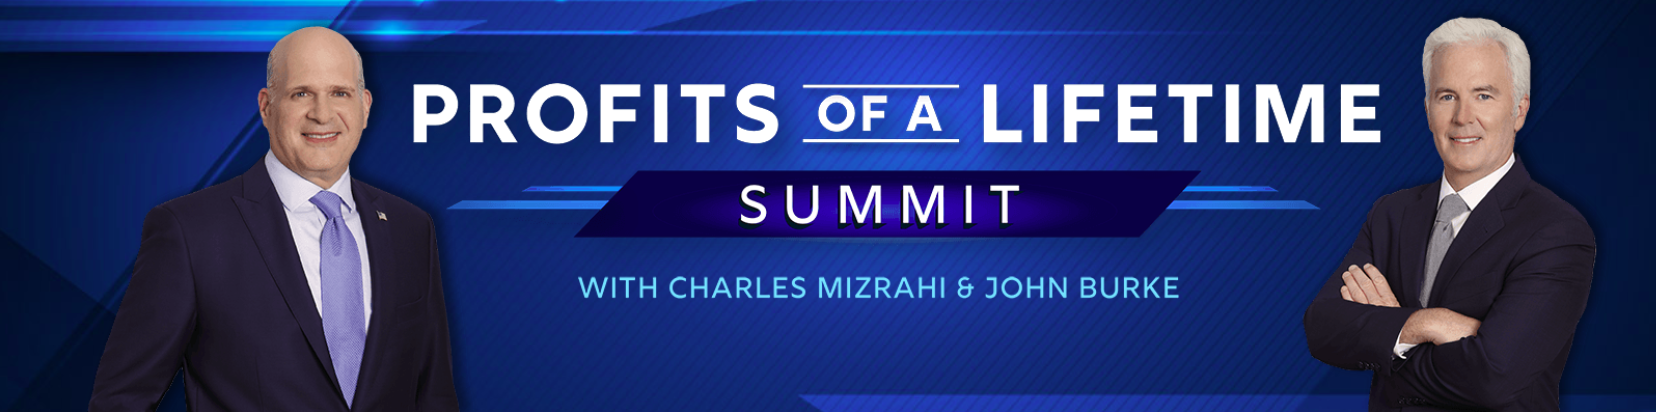 Profits of a Lifetime Summit